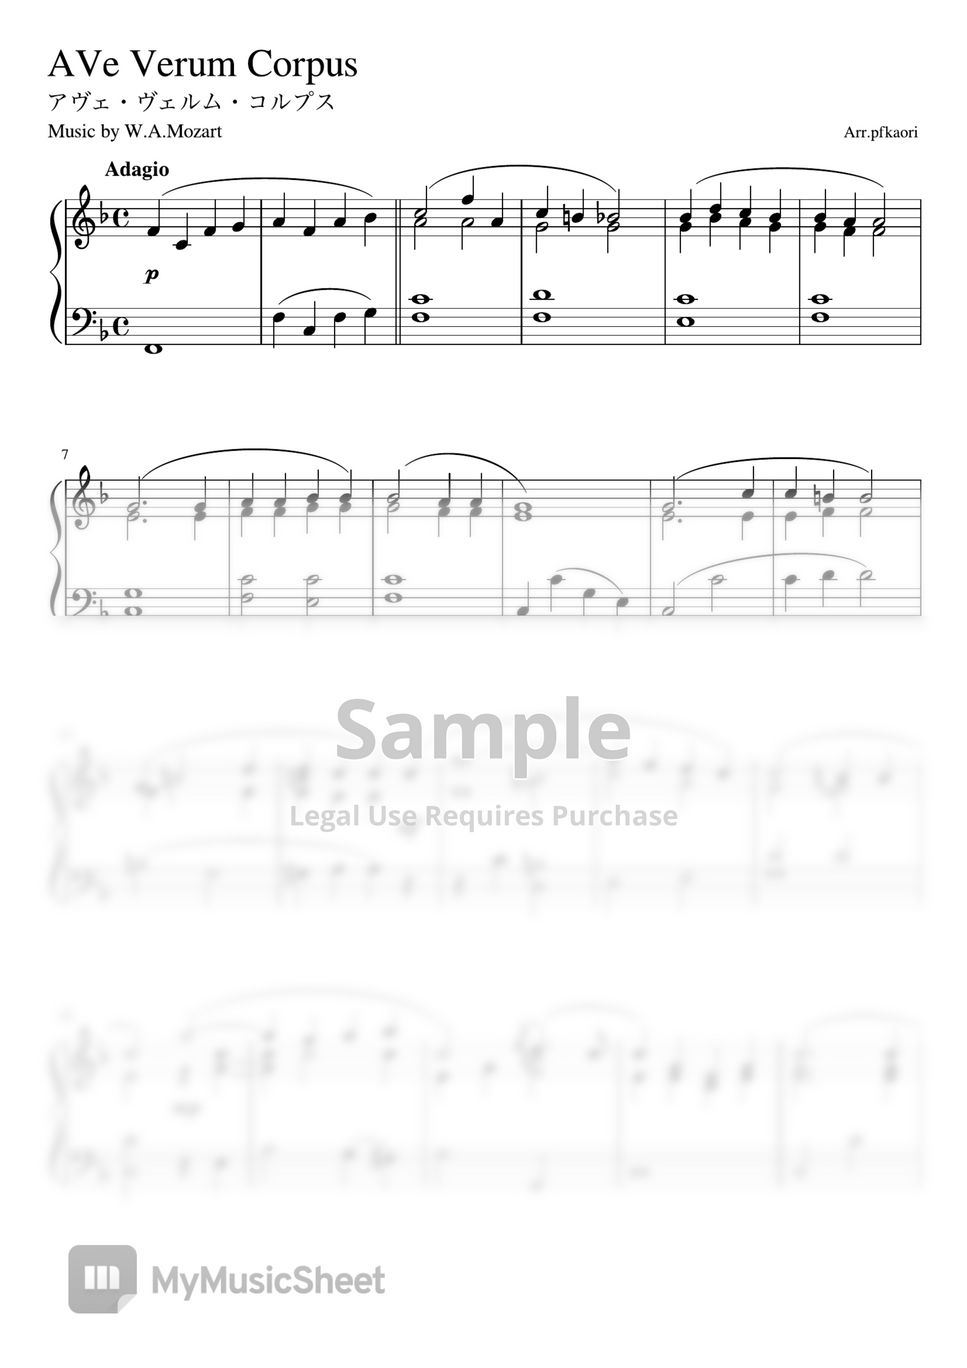 A.W.Mozart - Ave Verum Corpus (Fdur・piano solo Beginner to Intermediate) by pfkaori